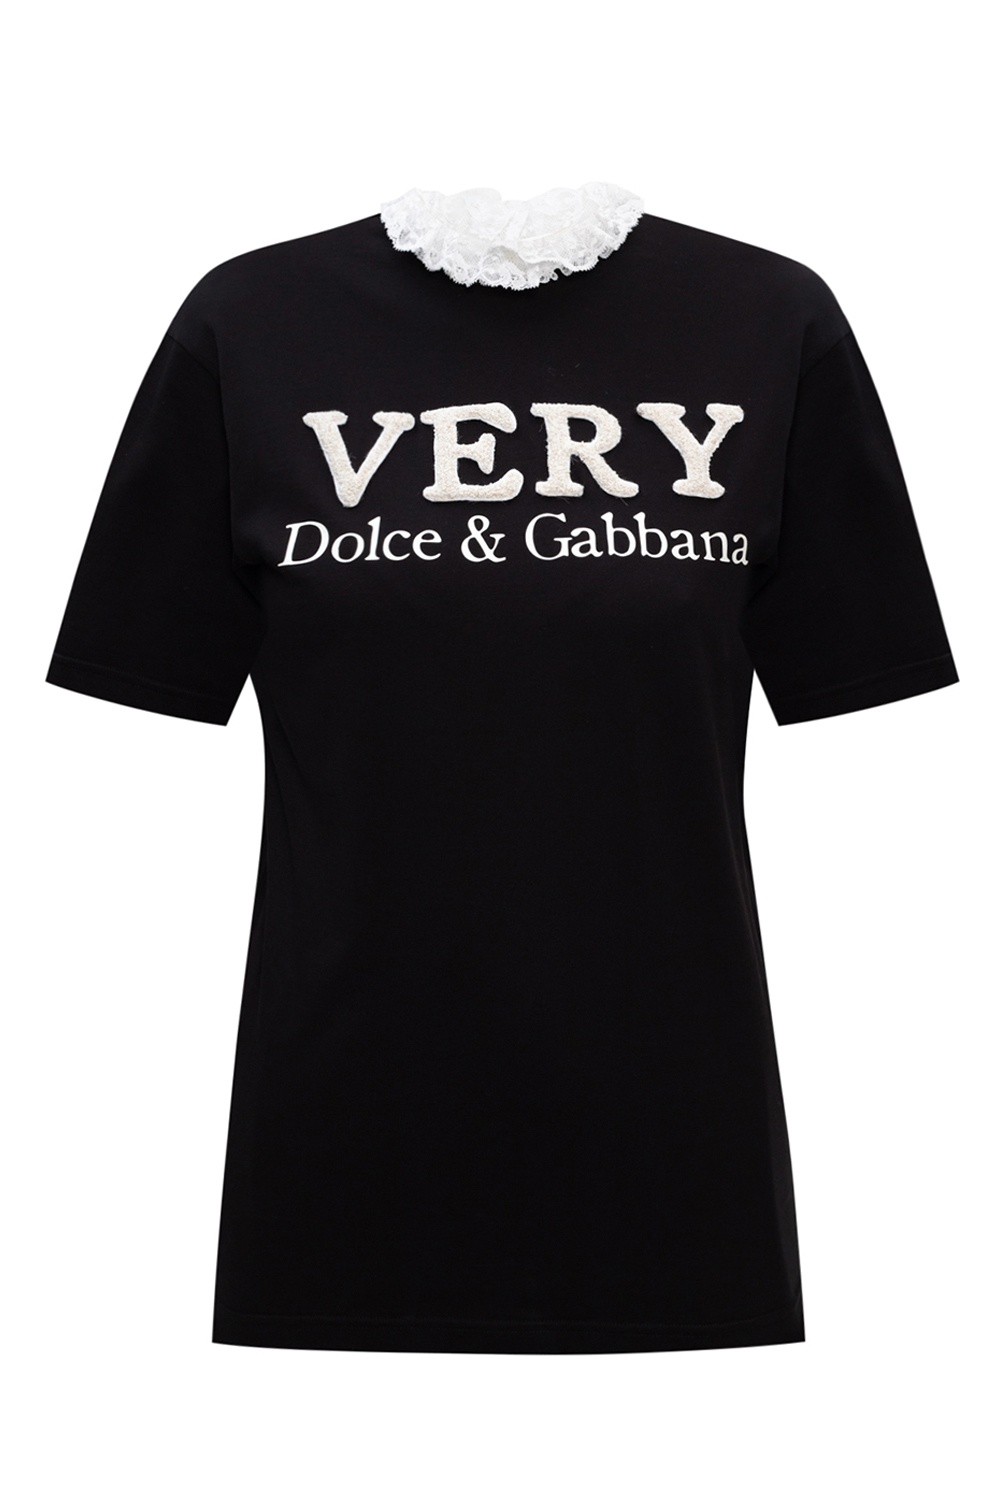 dolce and gabbana t shirt size chart